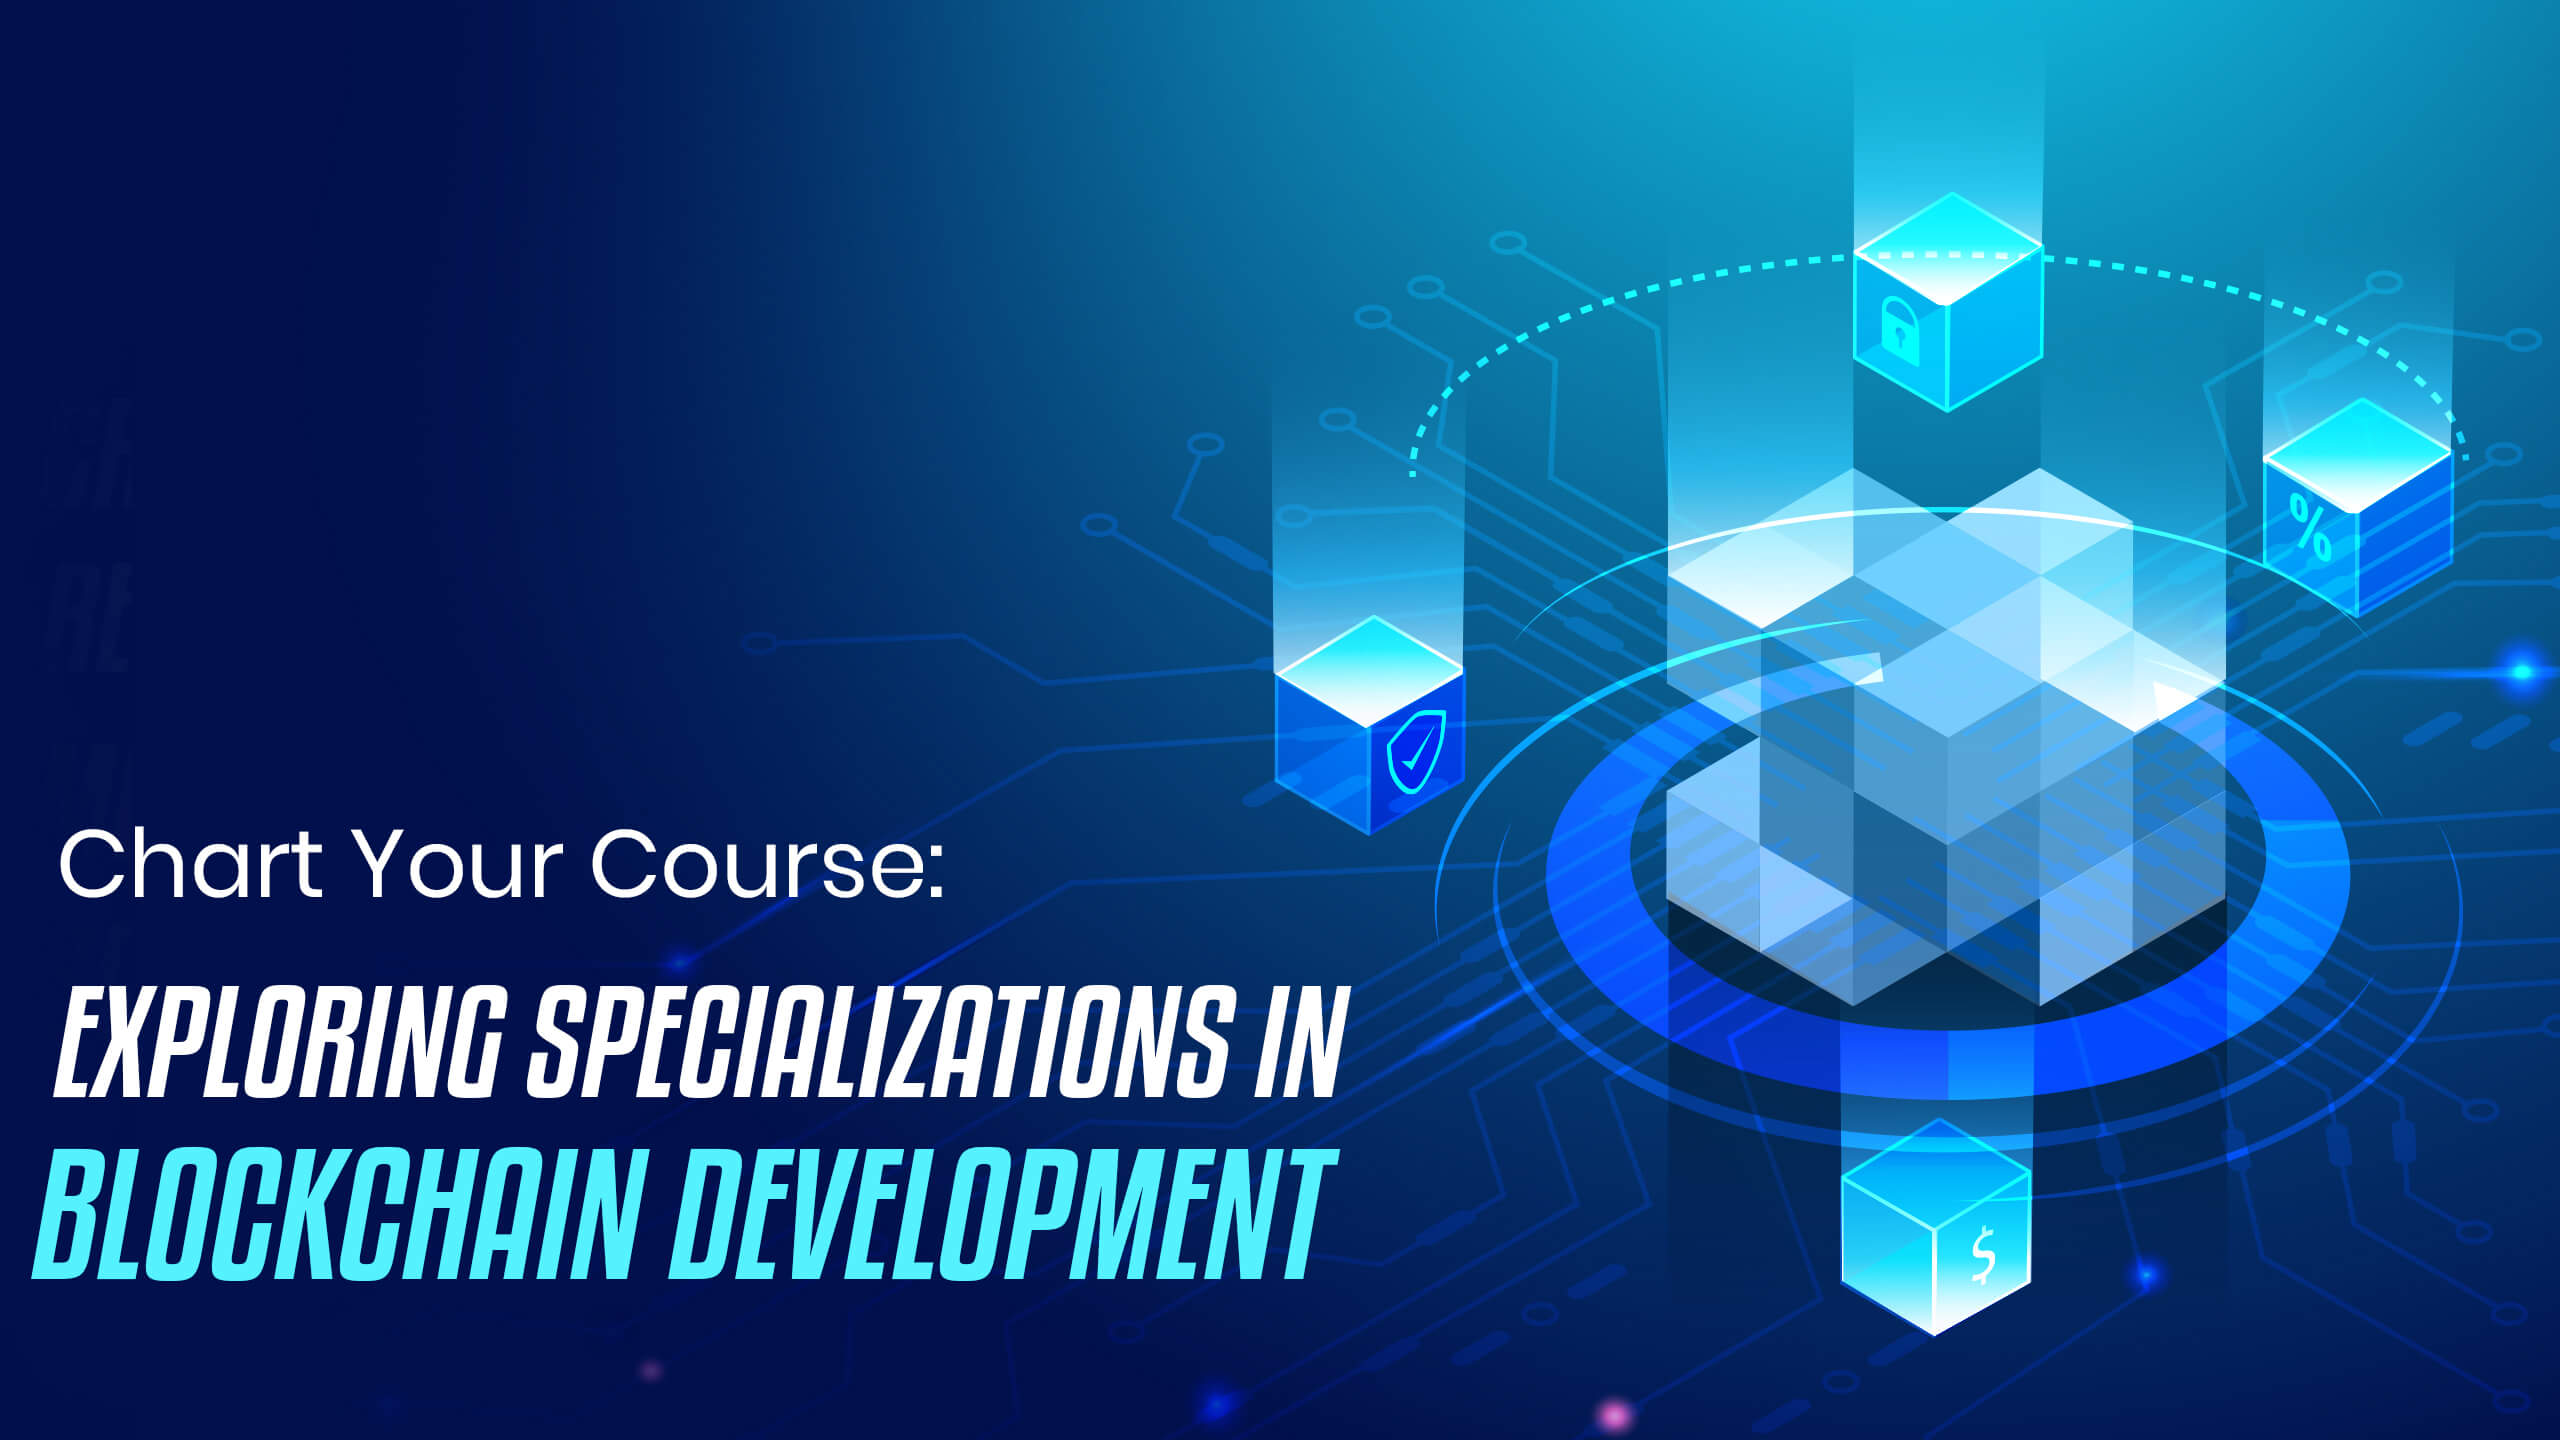 Specializations in Blockchain Development